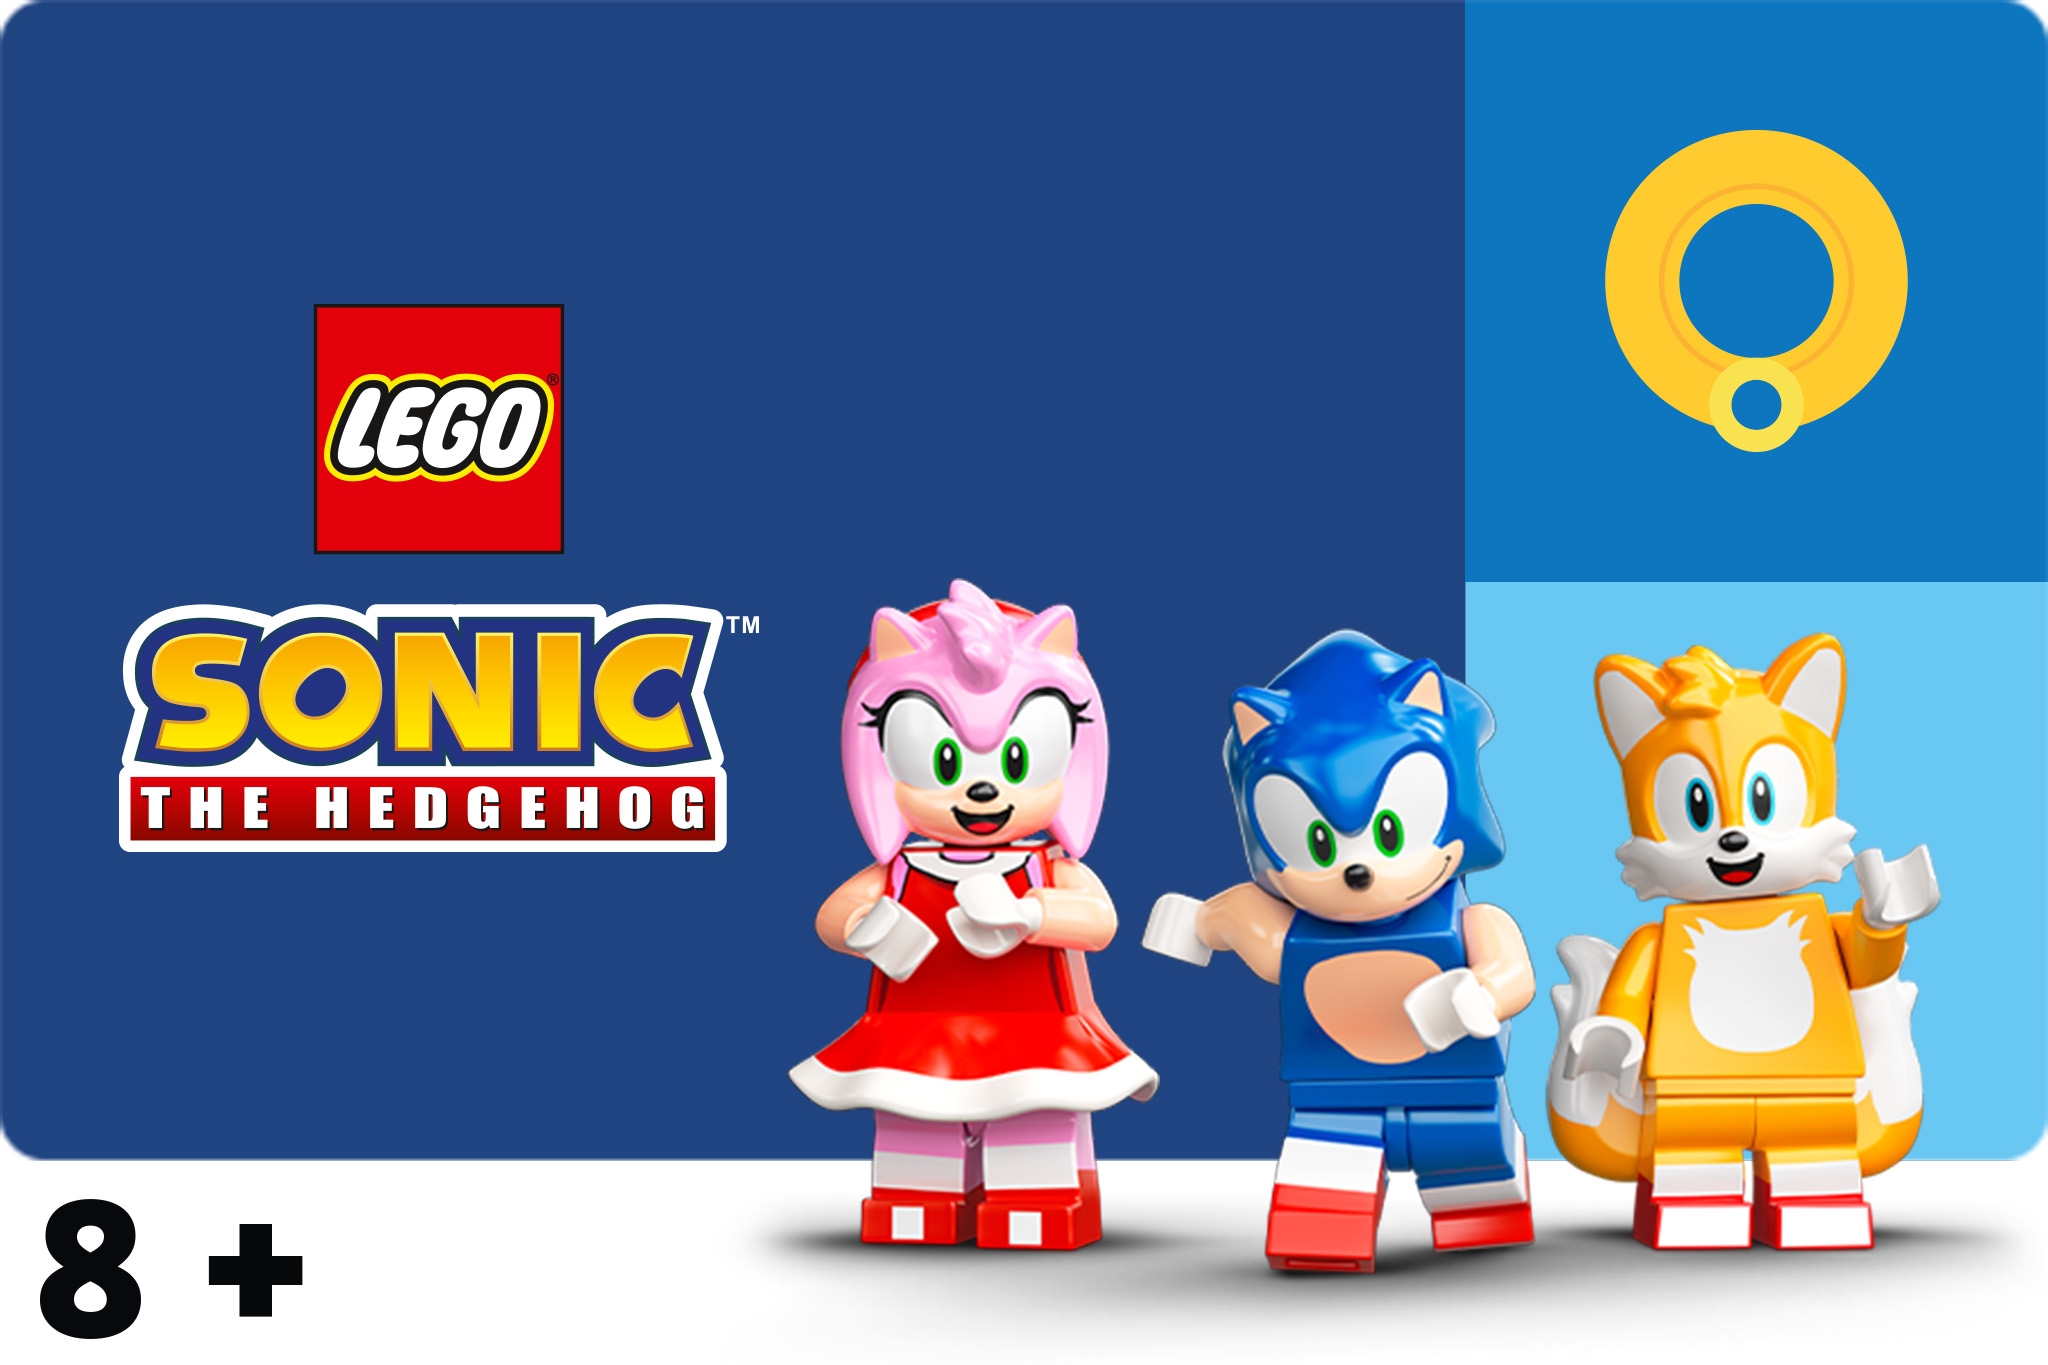 LEG_Web_LEGO Sonic the Hedgehog